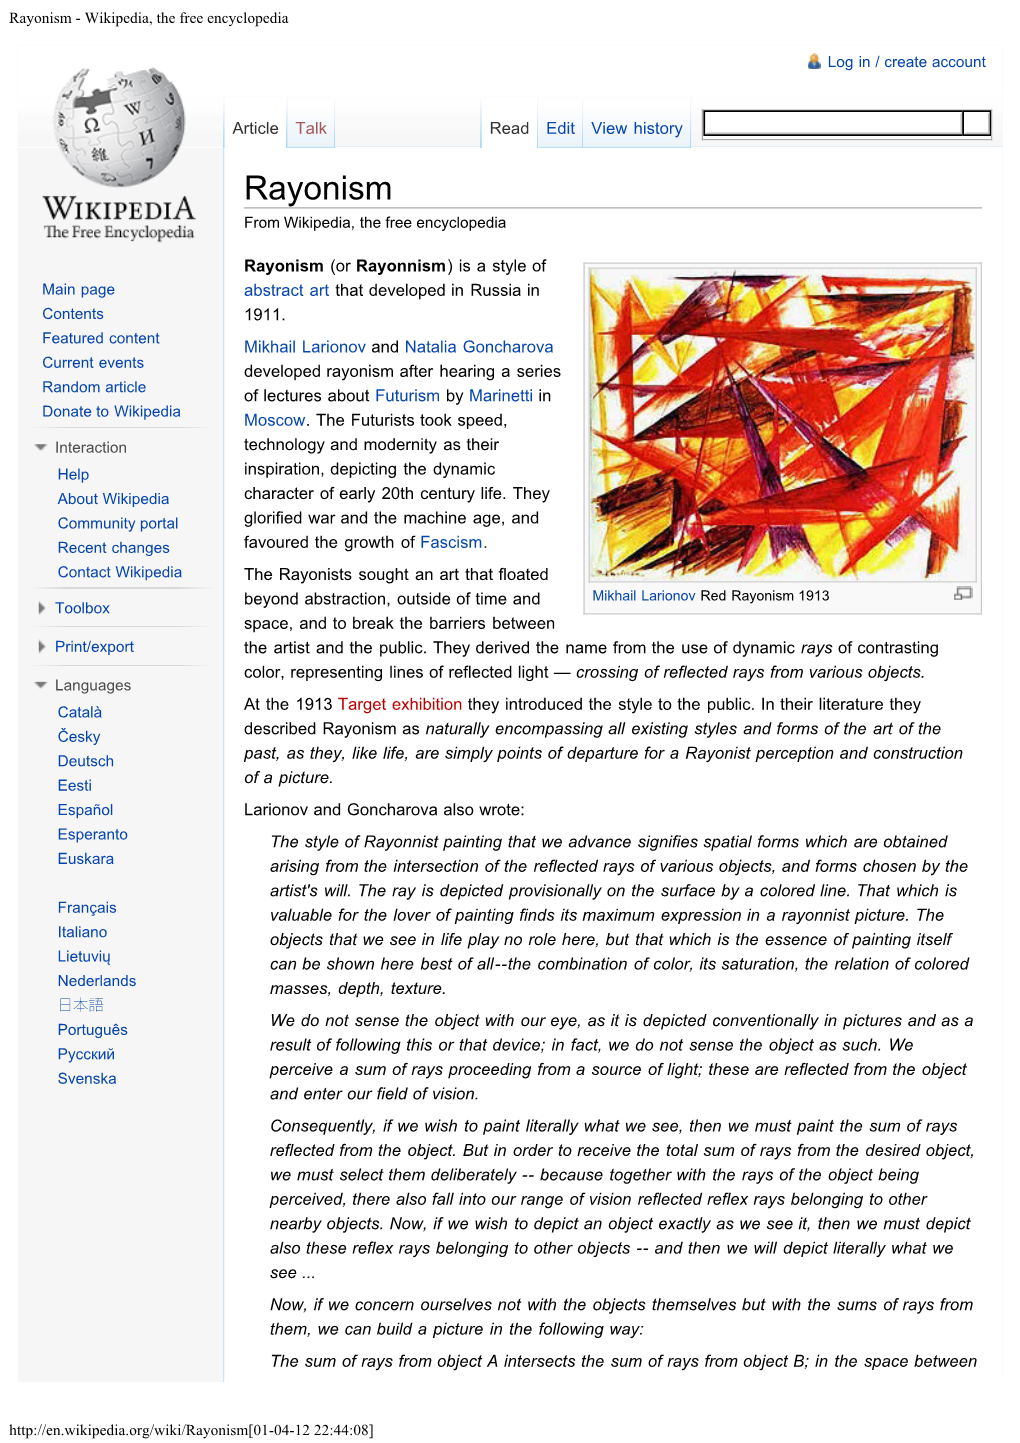 Rayonism - Wikipedia, the Free Encyclopedia